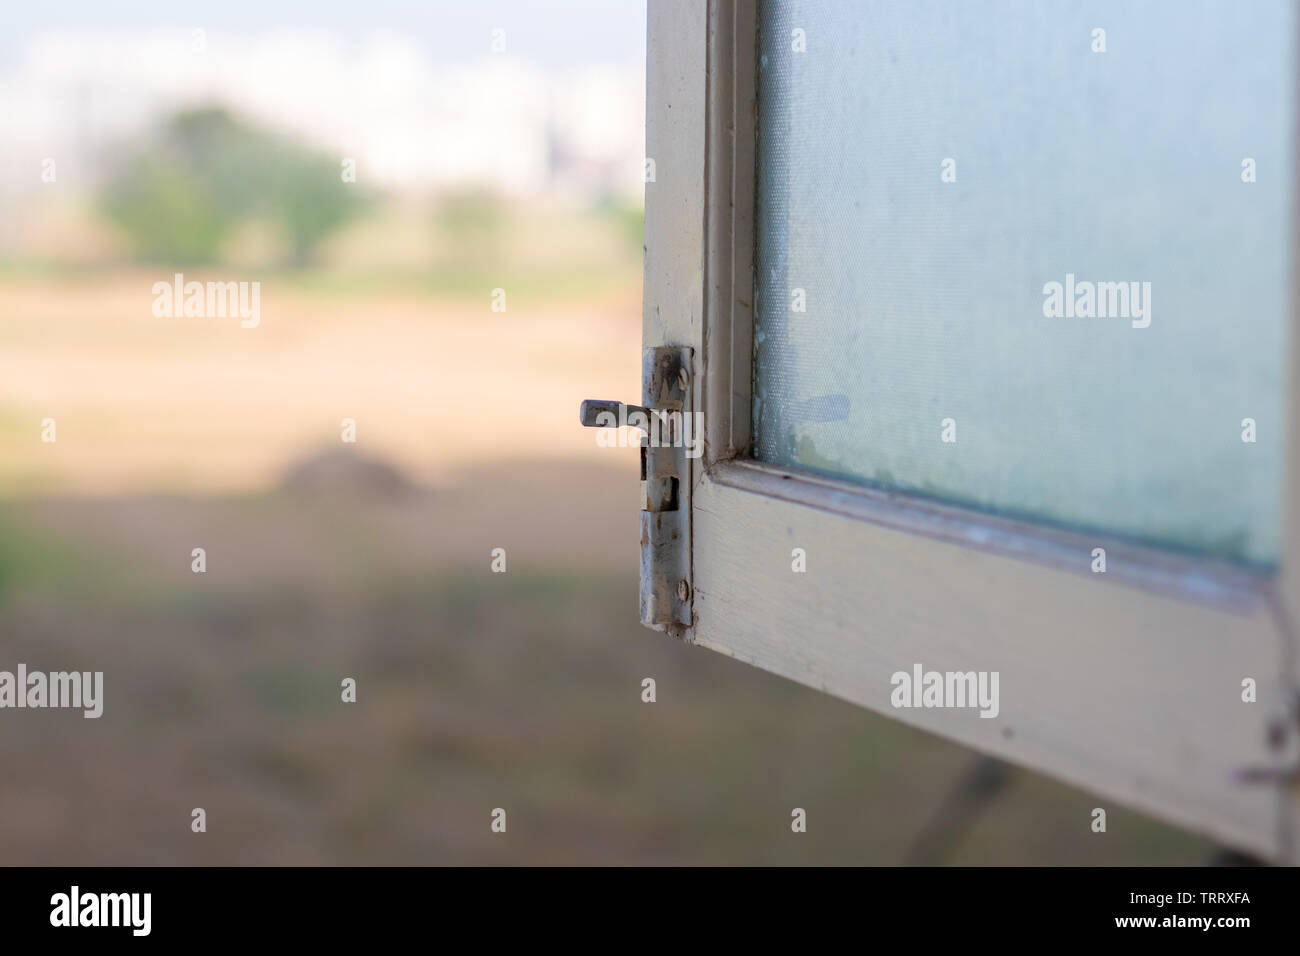 Open Window, blurry outside view through window Stock Photo